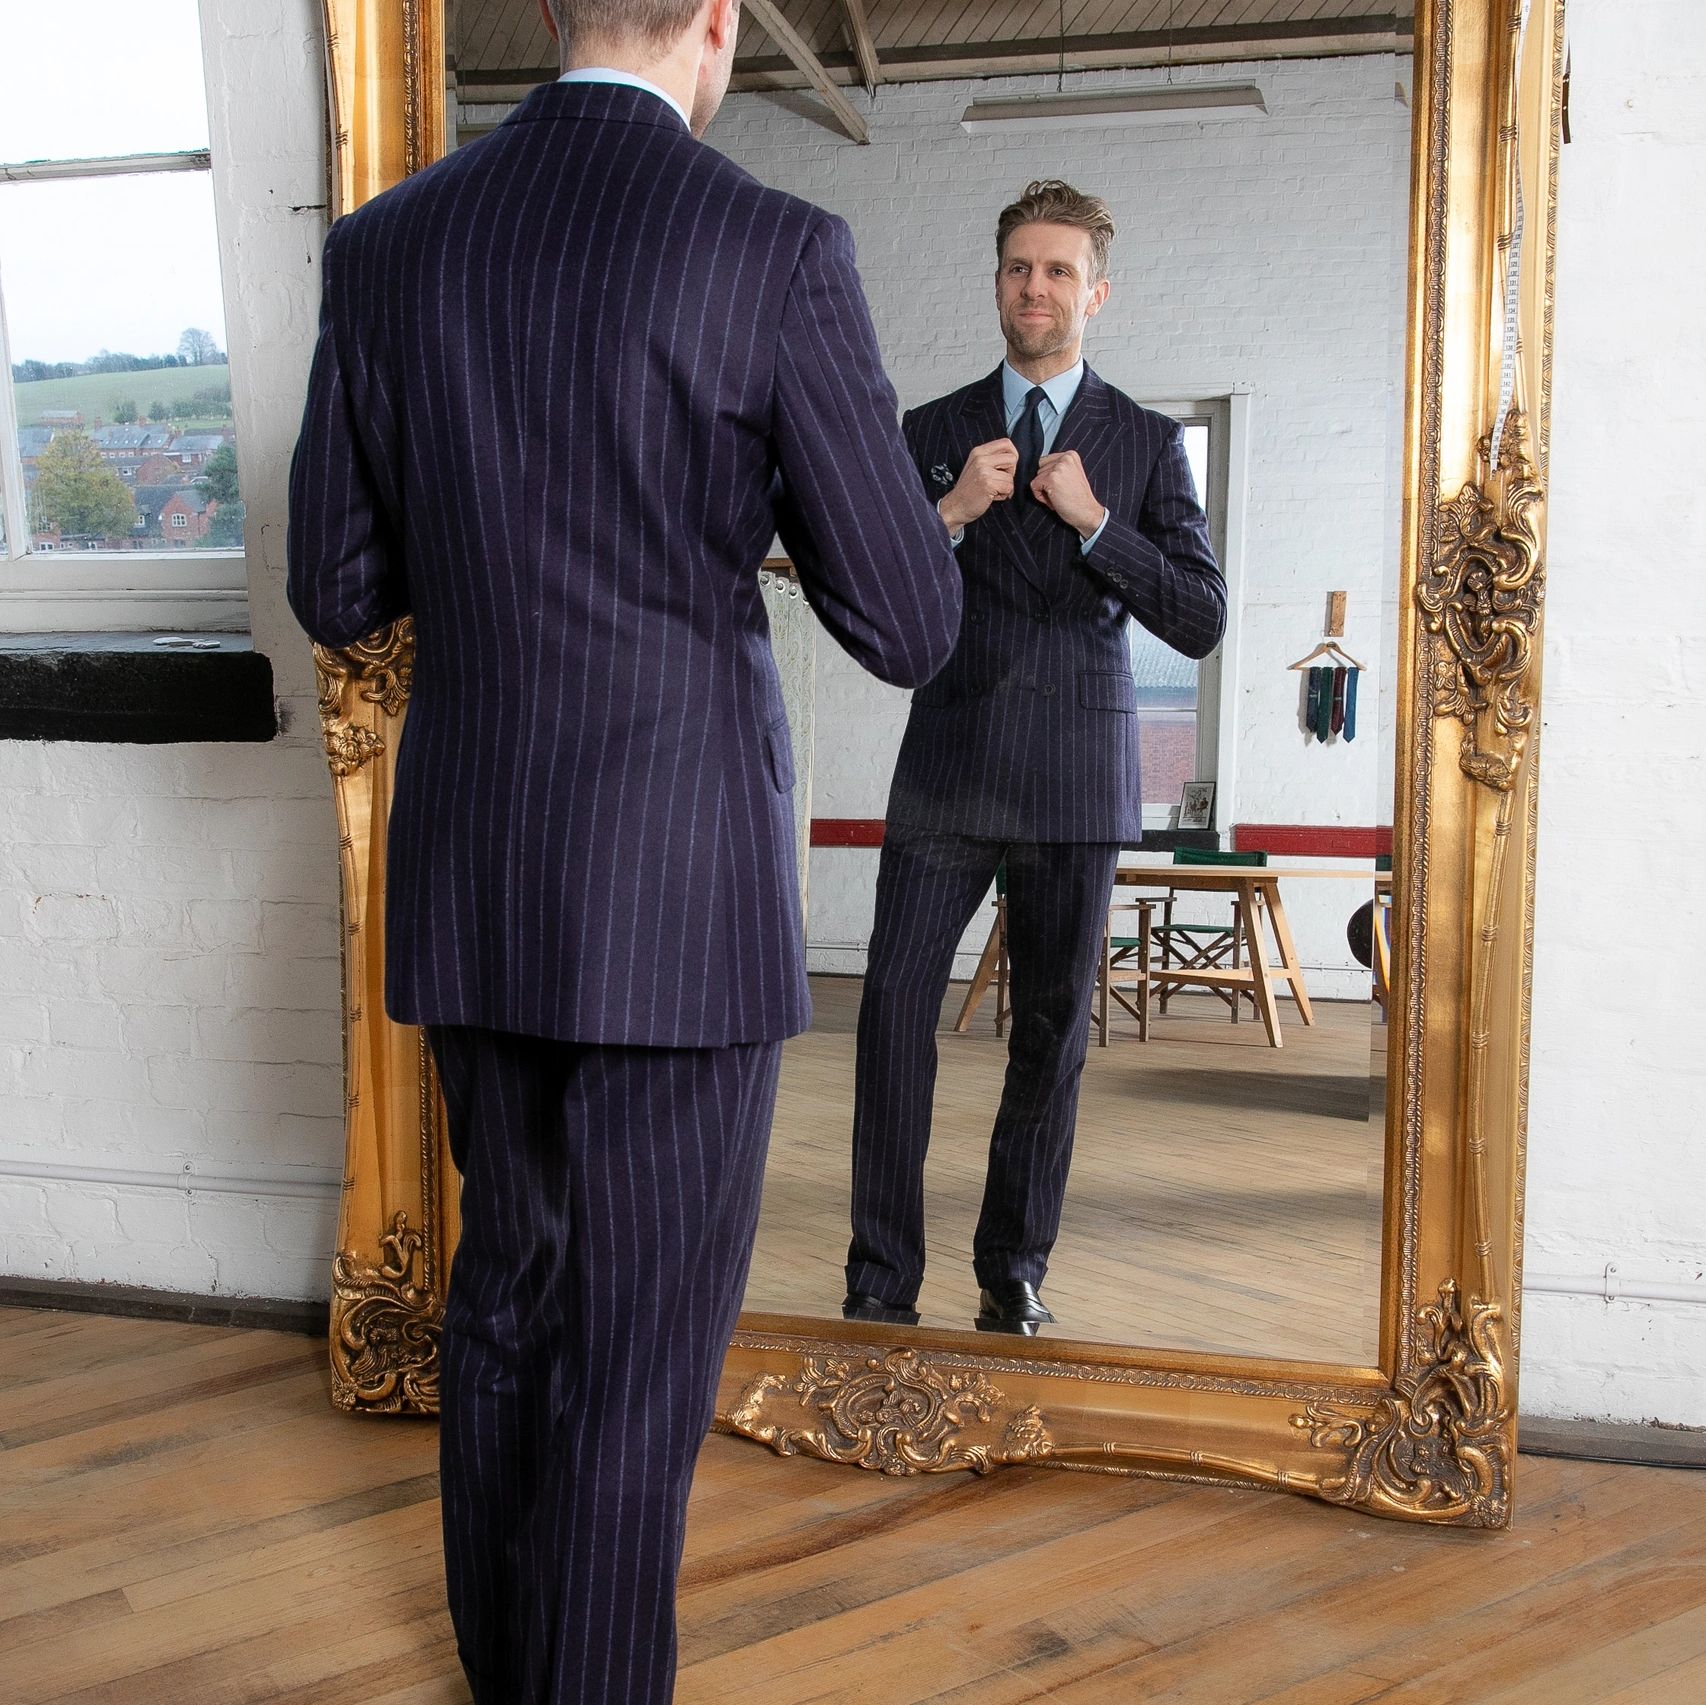 Nicholas checking his tie in the mirror